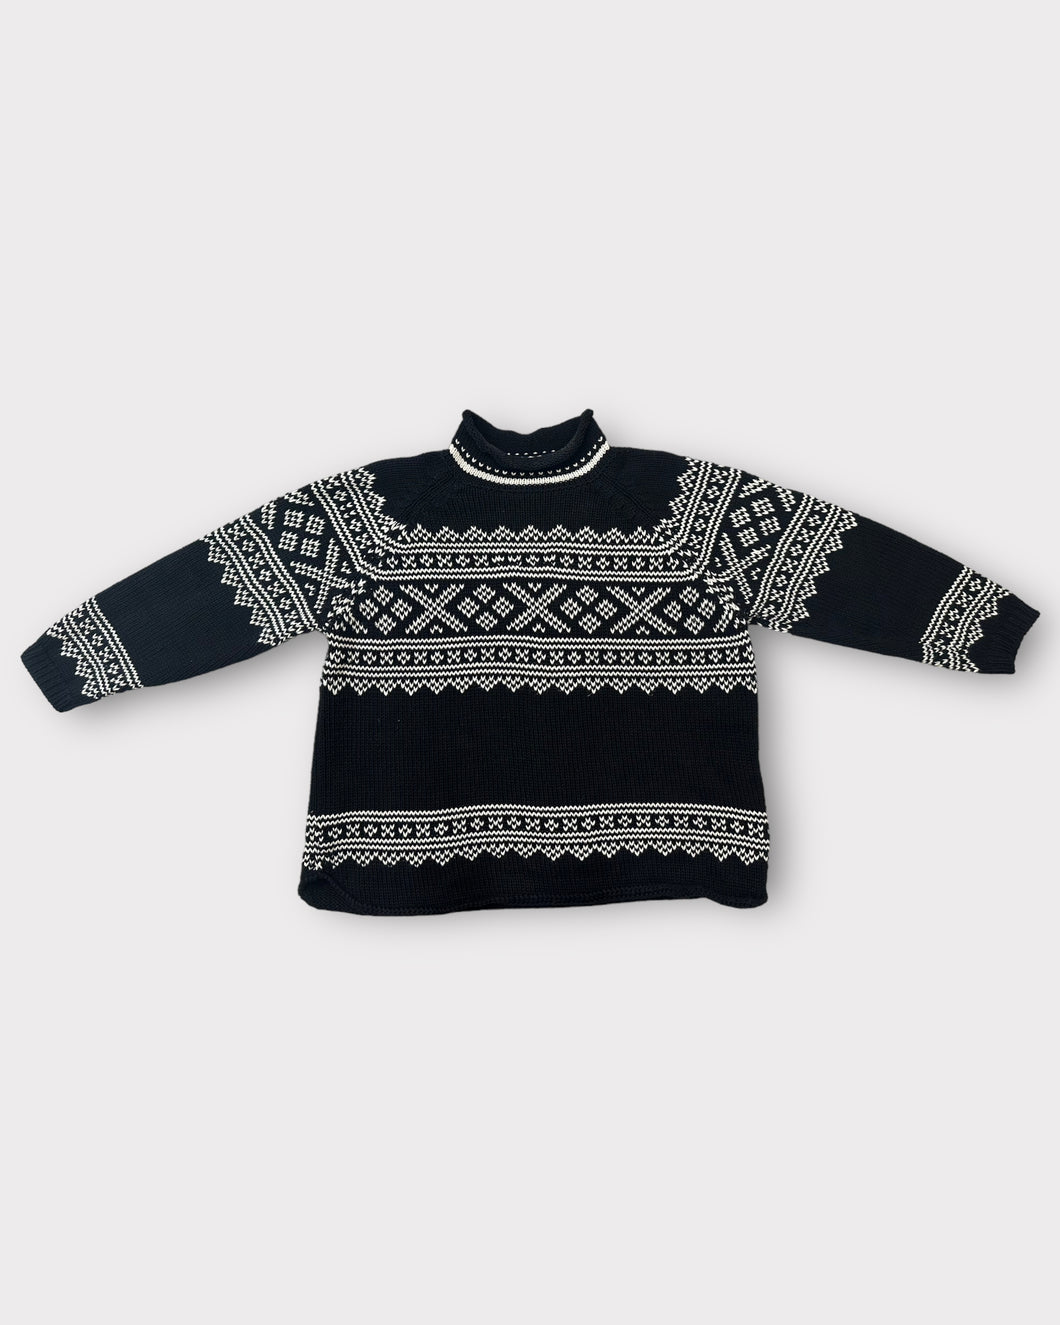 Eddie Bauer Black Knit Fair Isle Mockneck Sweater (M)